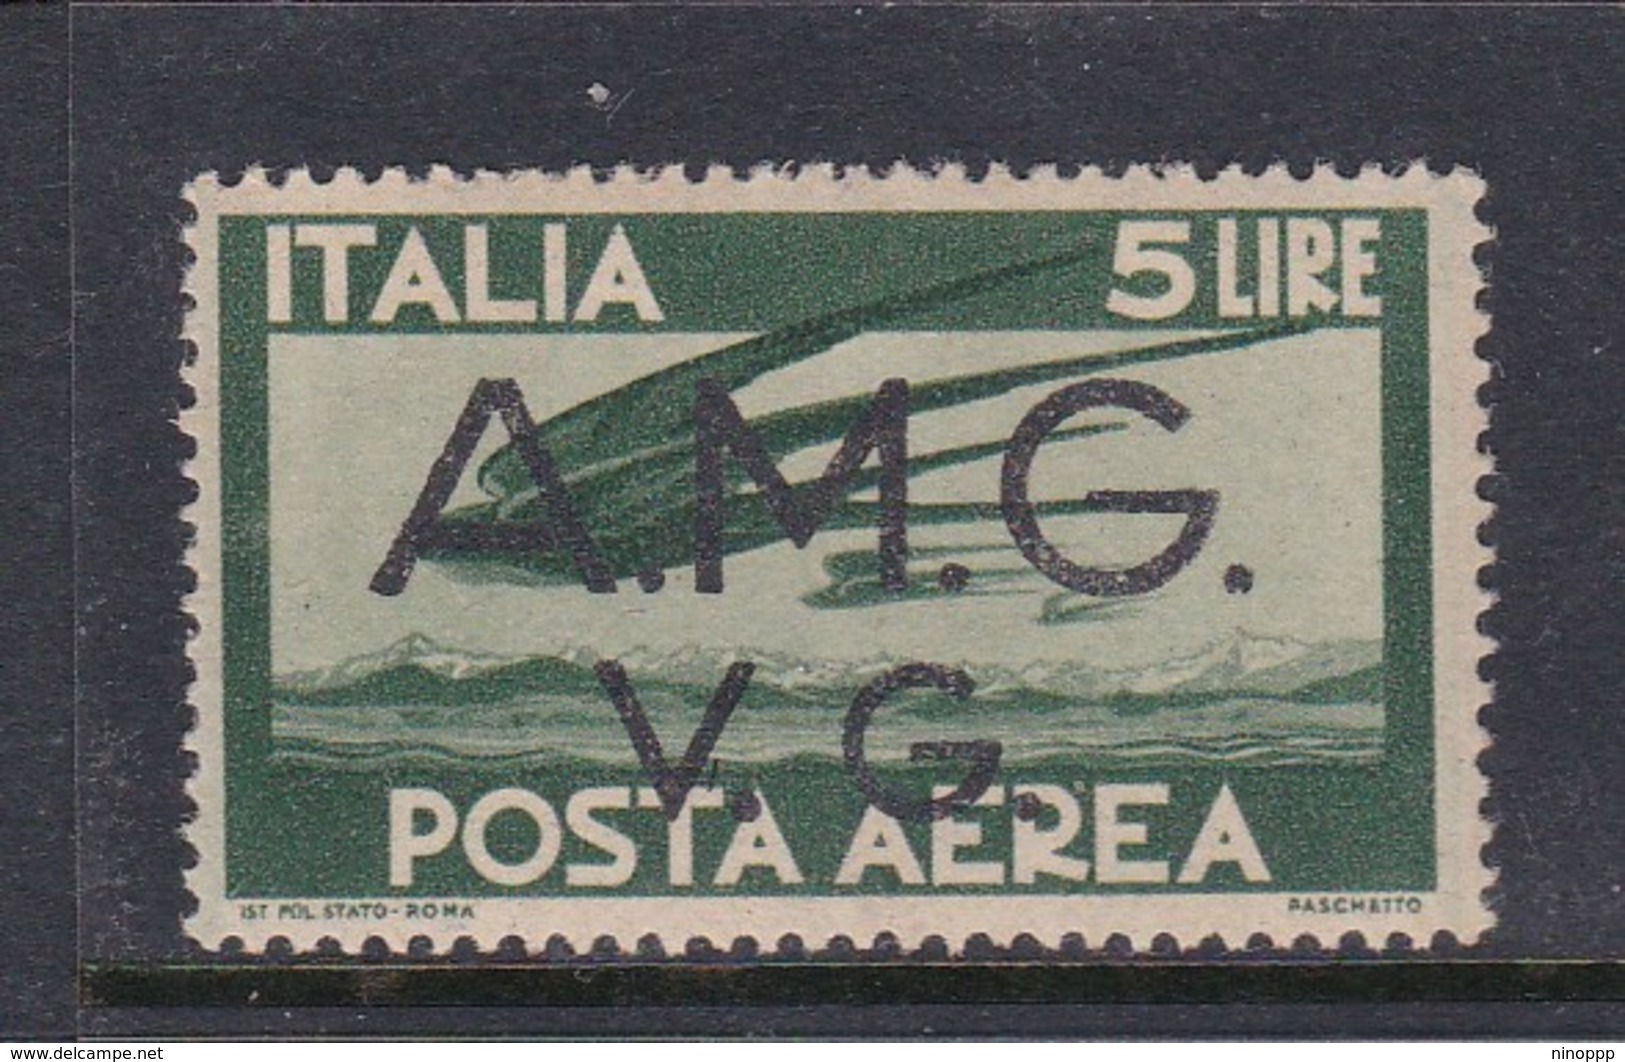 Venezia Giulia And Istria  A.M.G.V.G. Air Mail A 4 1945 Air Post 5 Lira Green Mint Never Hinged - Mint/hinged